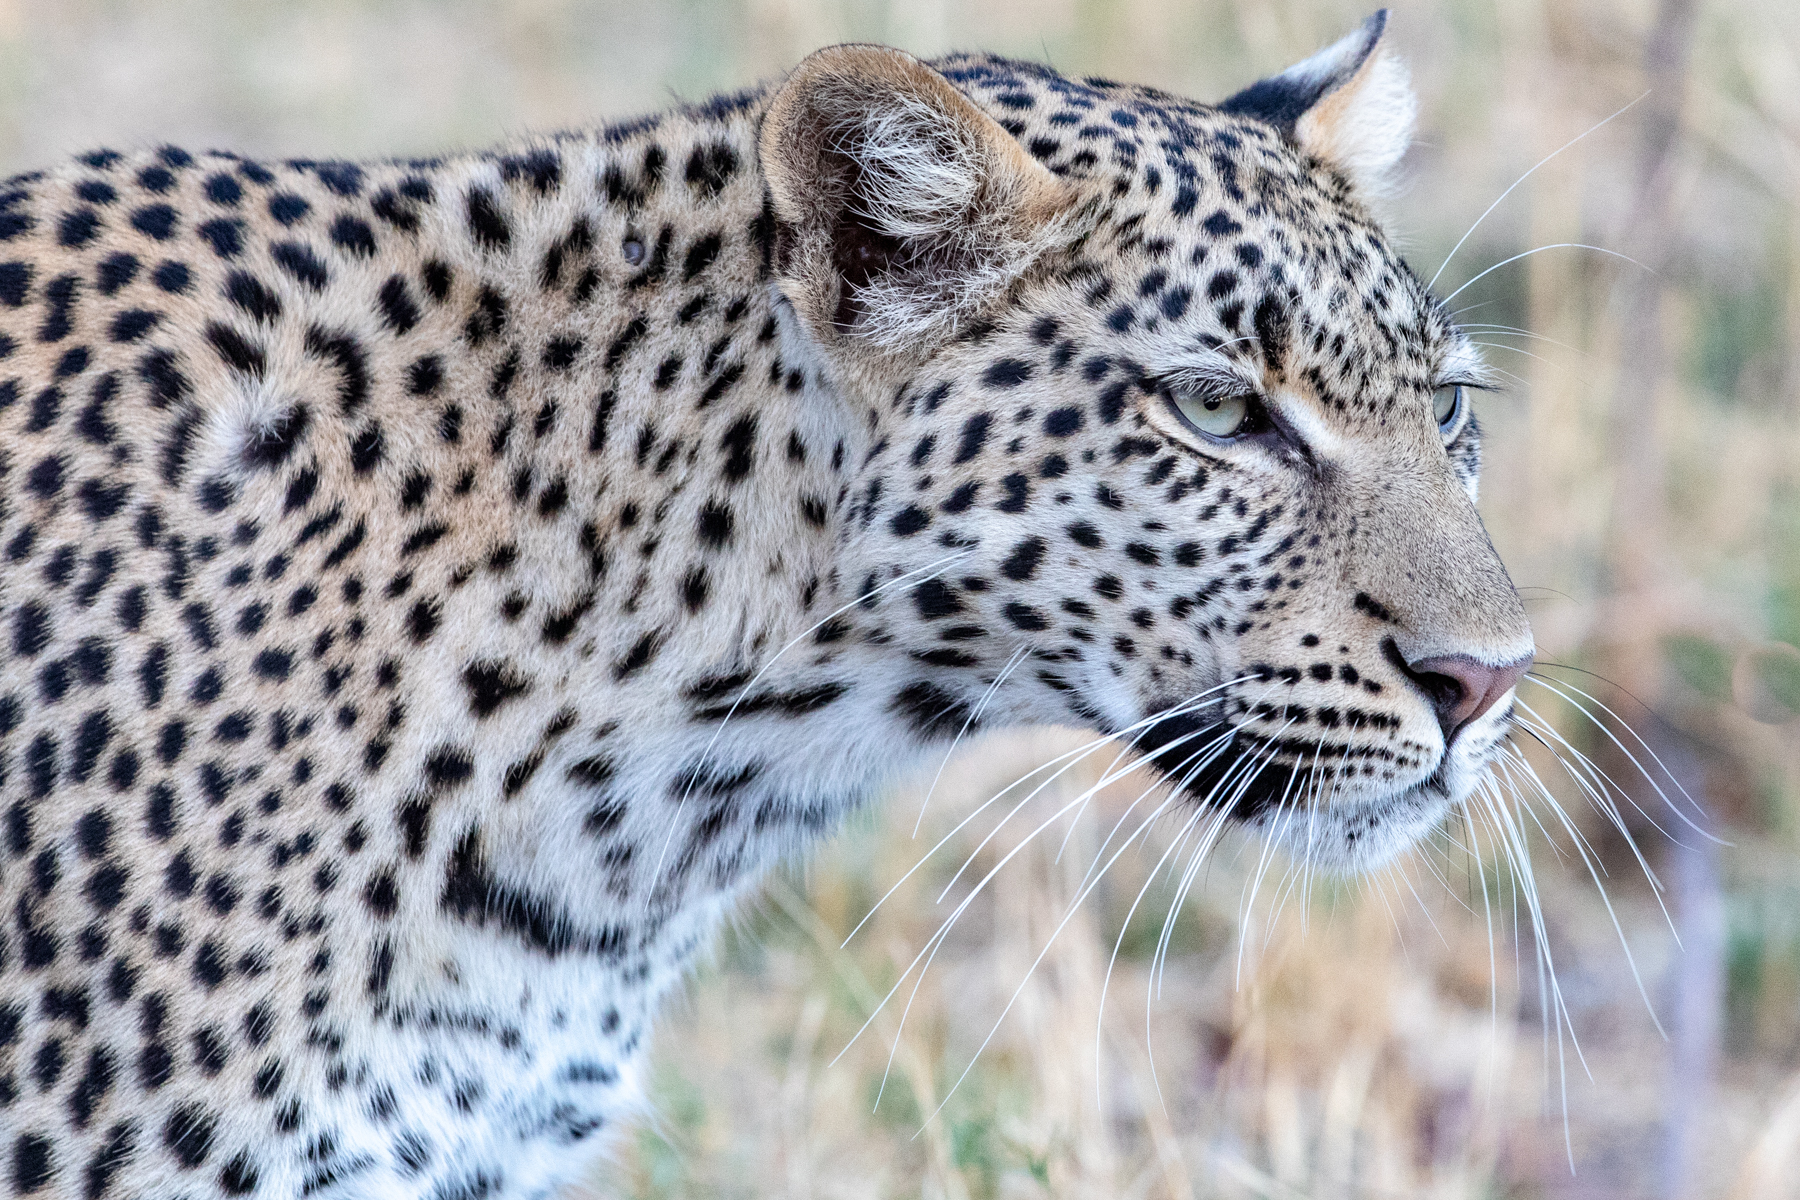 Leopard portrait (image by Mark Beaman)